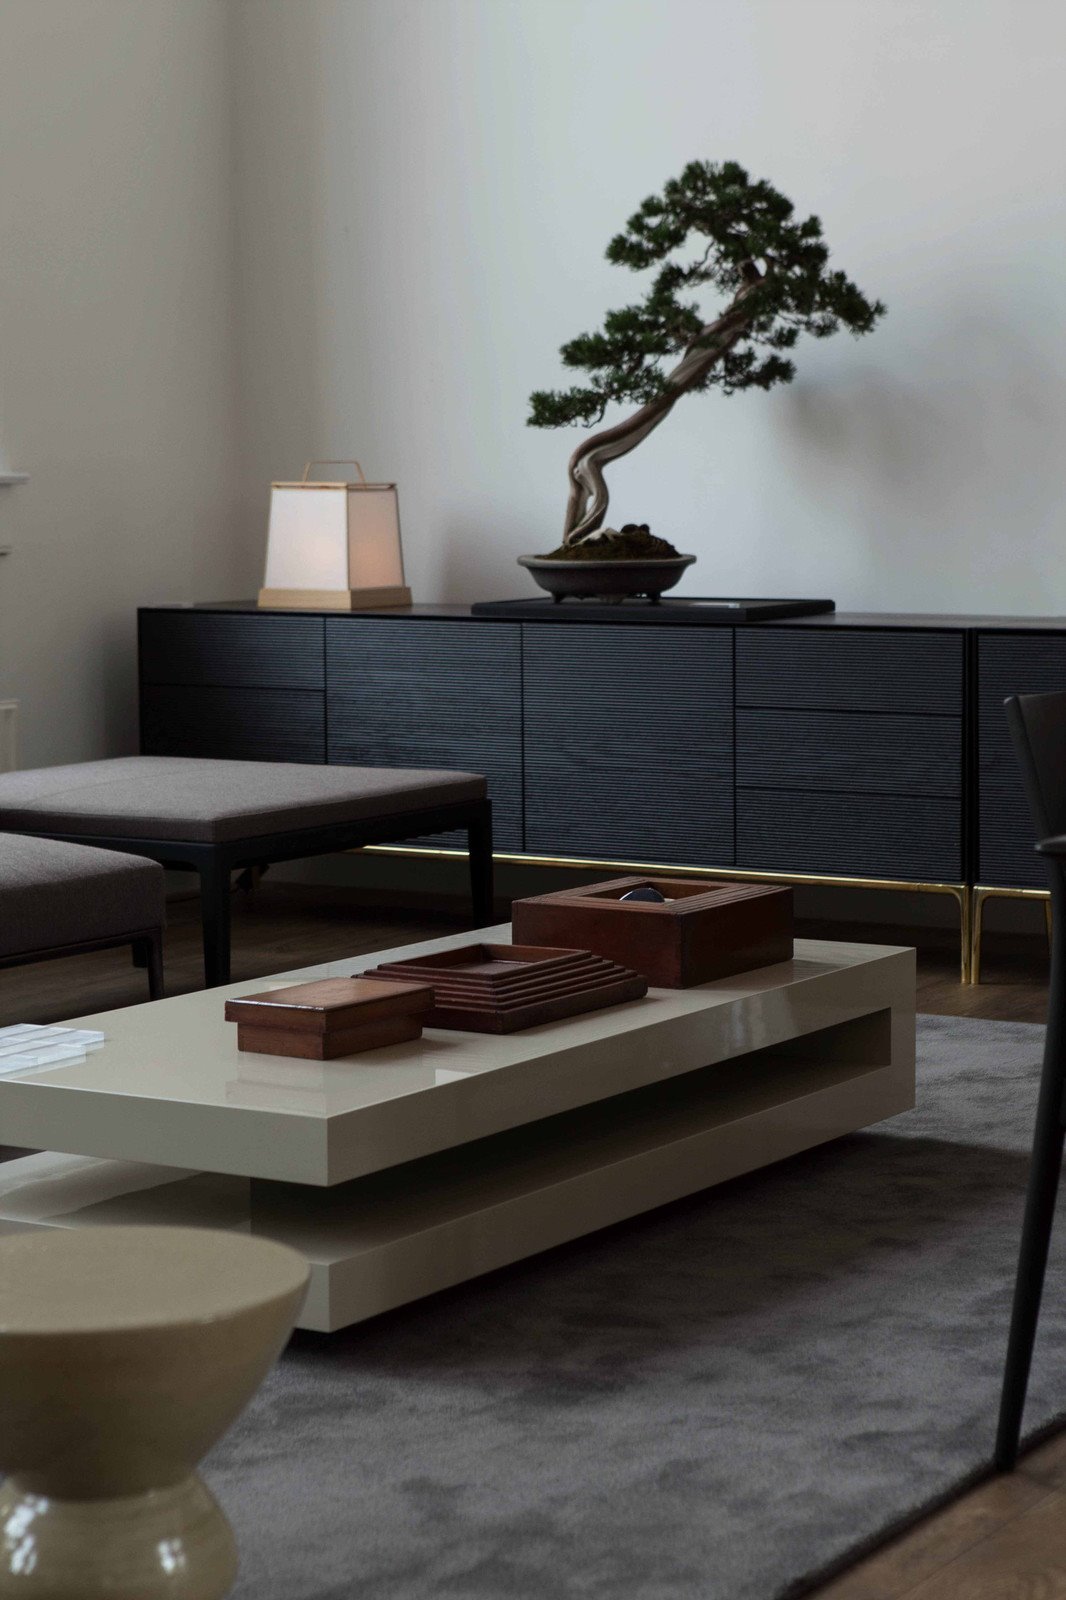 Tienda en Amsterdam de mobiliario moderno Time & Style creada por Kengo Kuma mesa de centro y bonsai